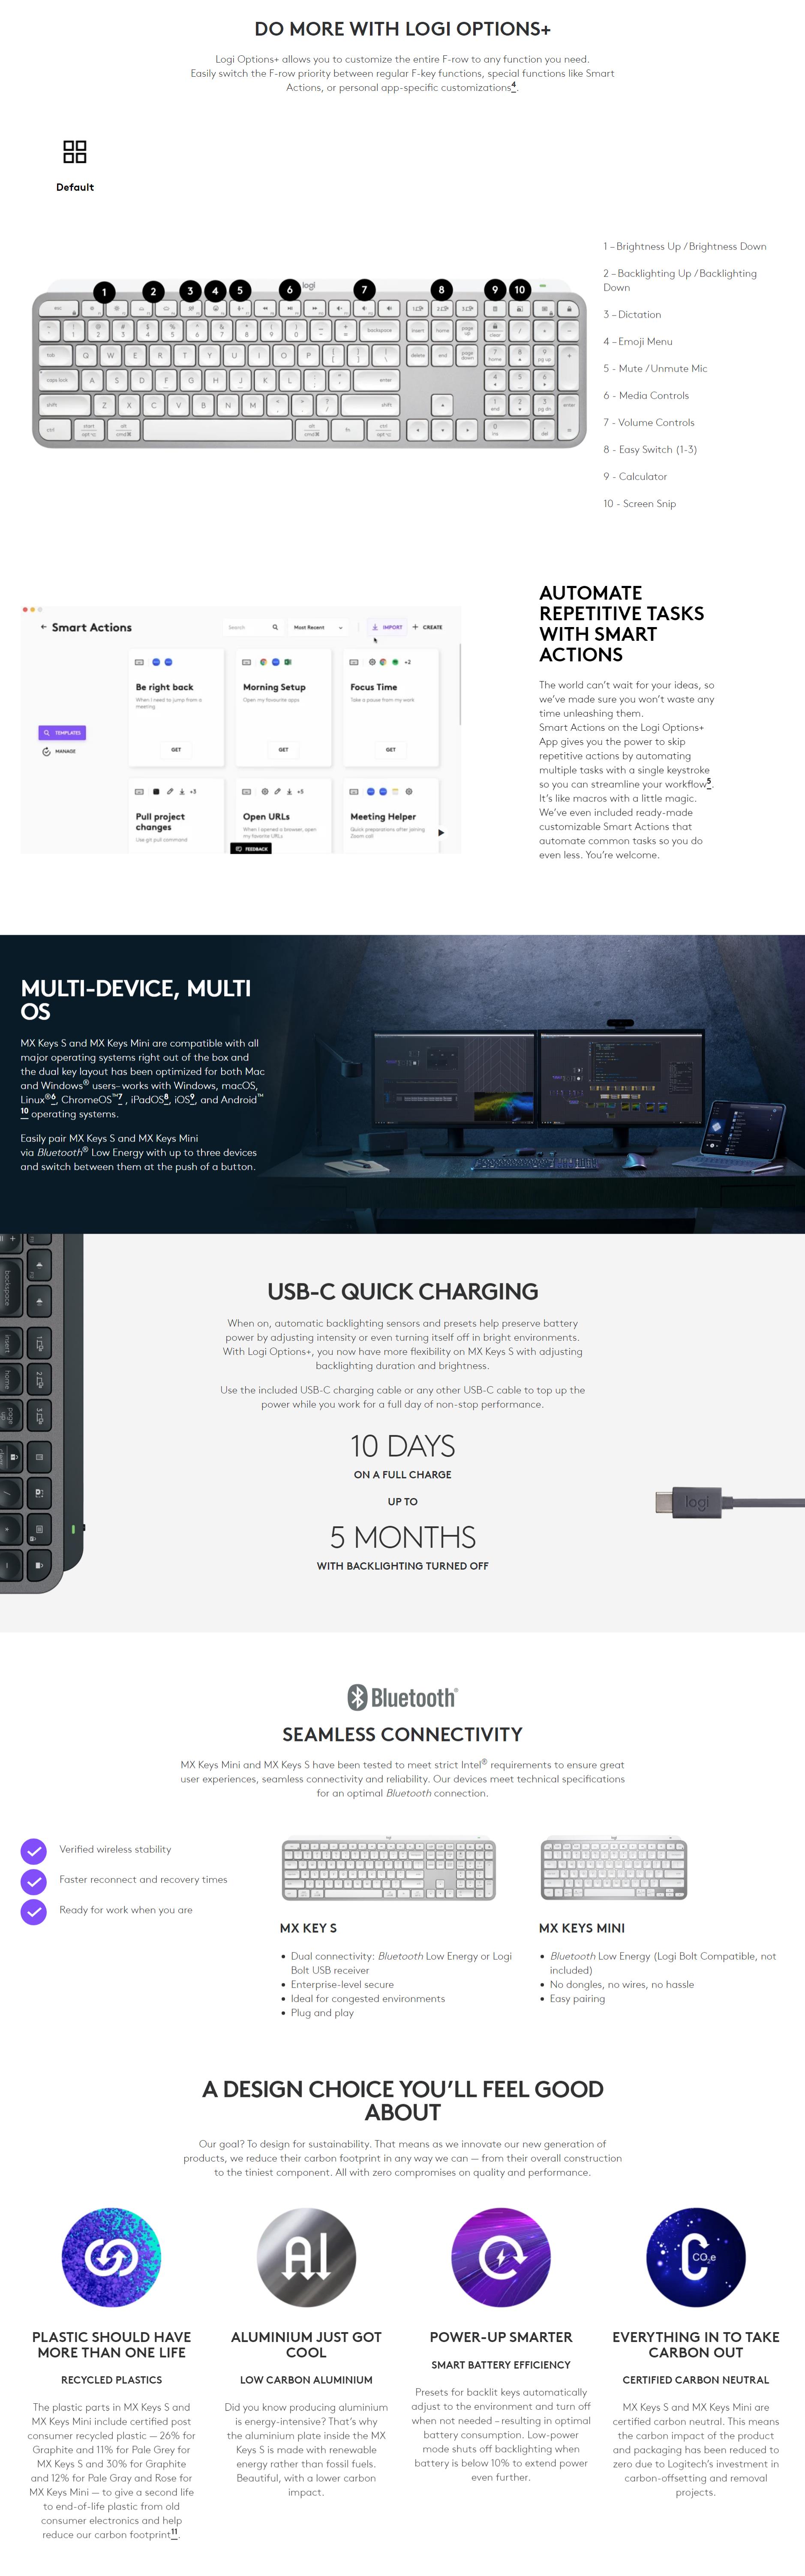 A large marketing image providing additional information about the product Logitech MX Keys S Wireless Keyboard - Pale Grey - Additional alt info not provided